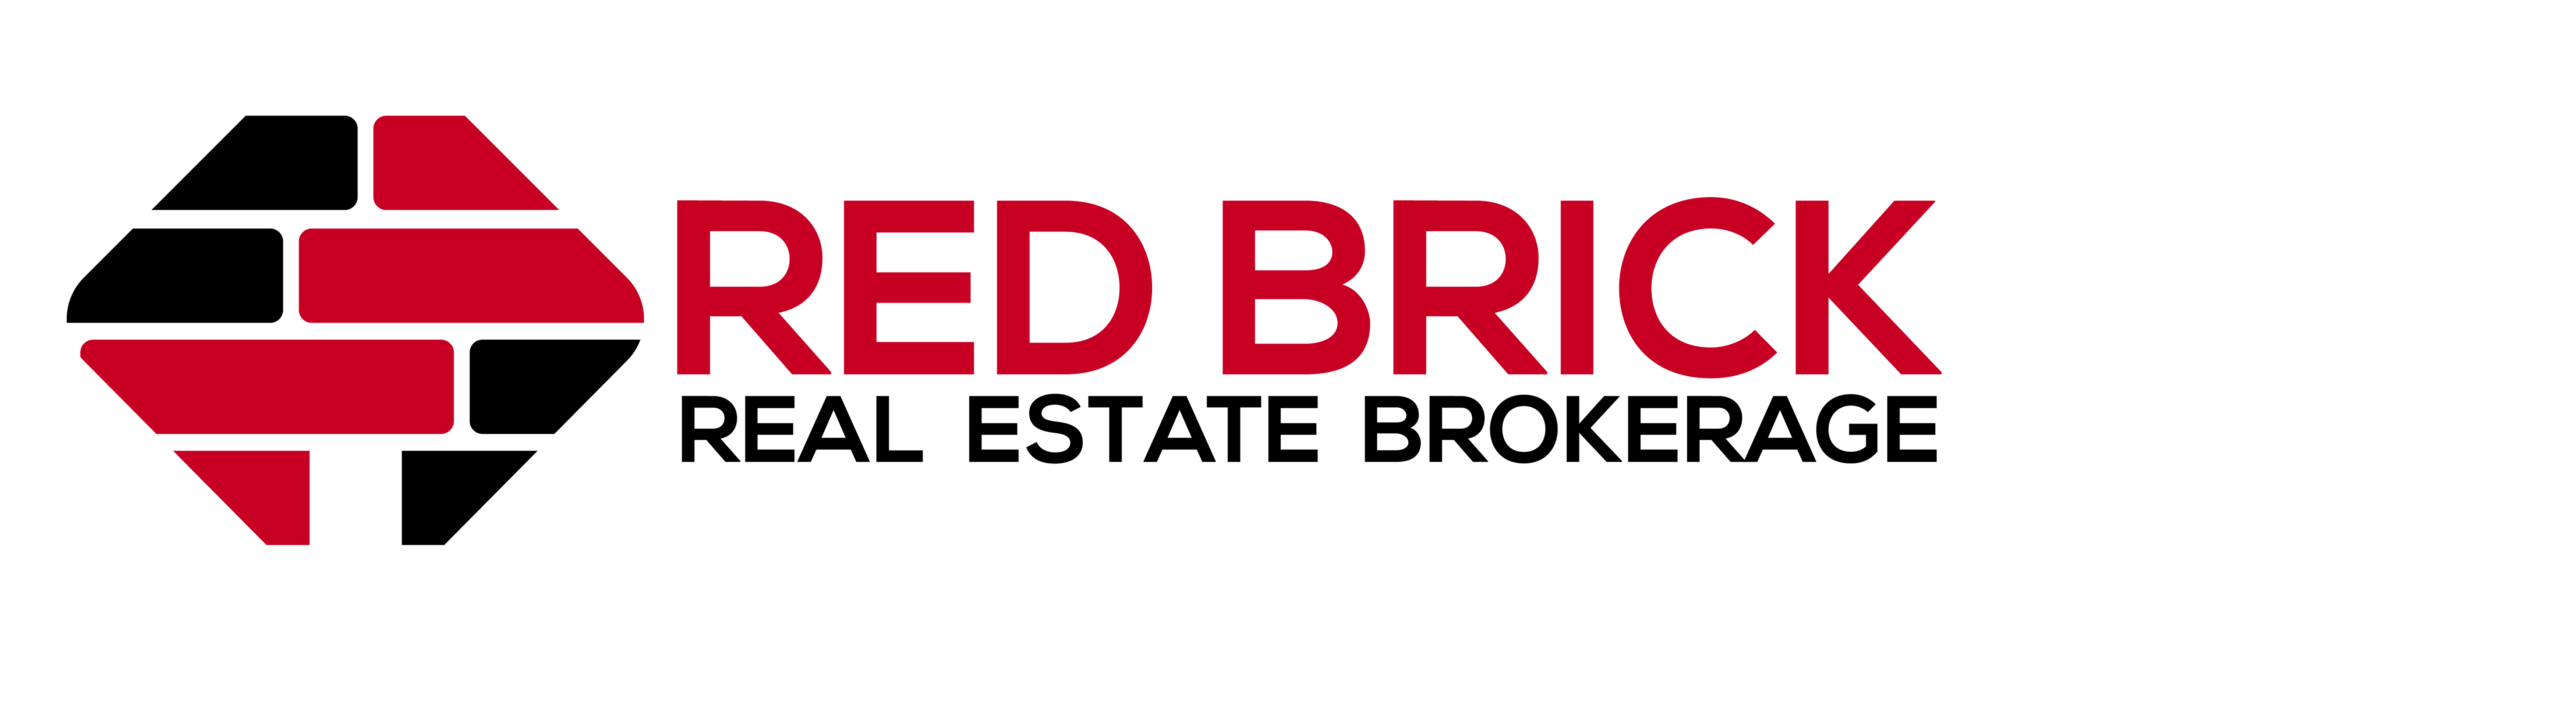 Red Brick Real Estate Brokerage